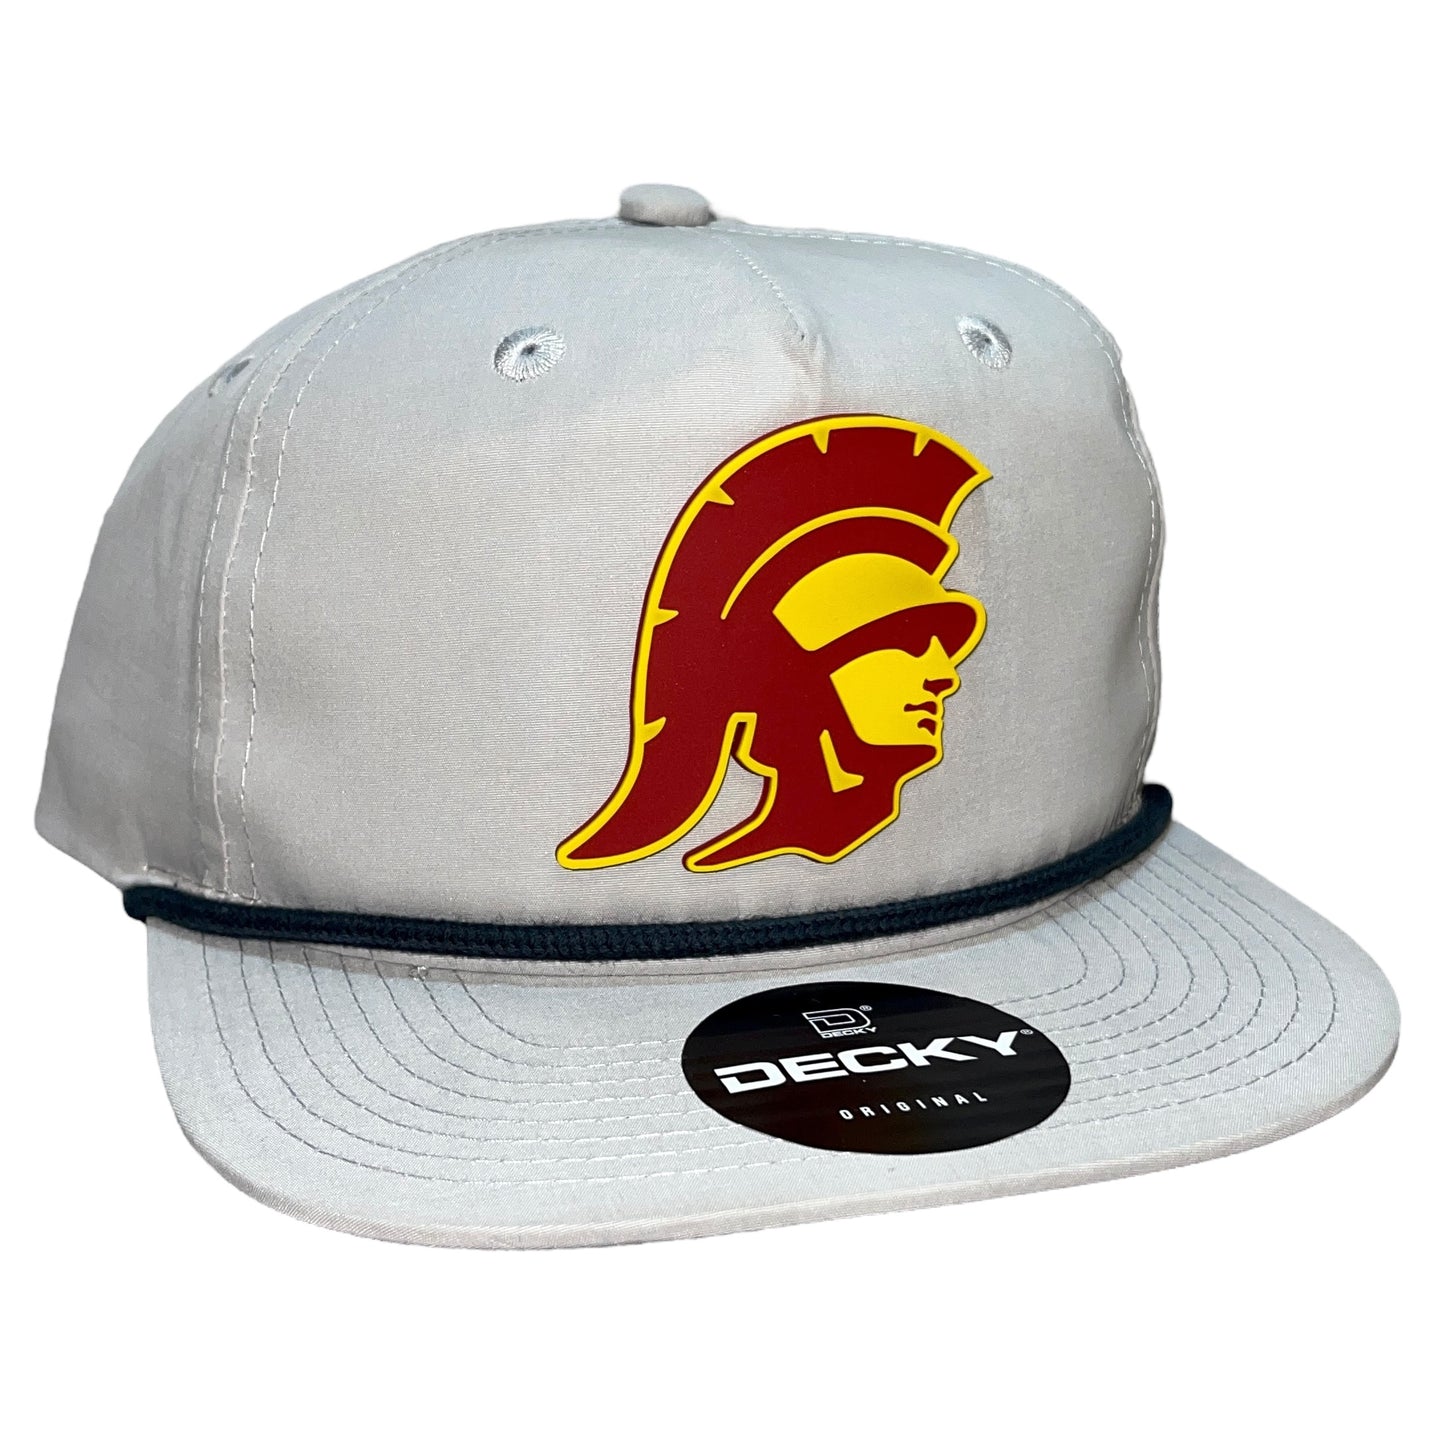 USC Trojans 3D Classic Rope Hat-Grey/ Charcoal - Ten Gallon Hat Co.